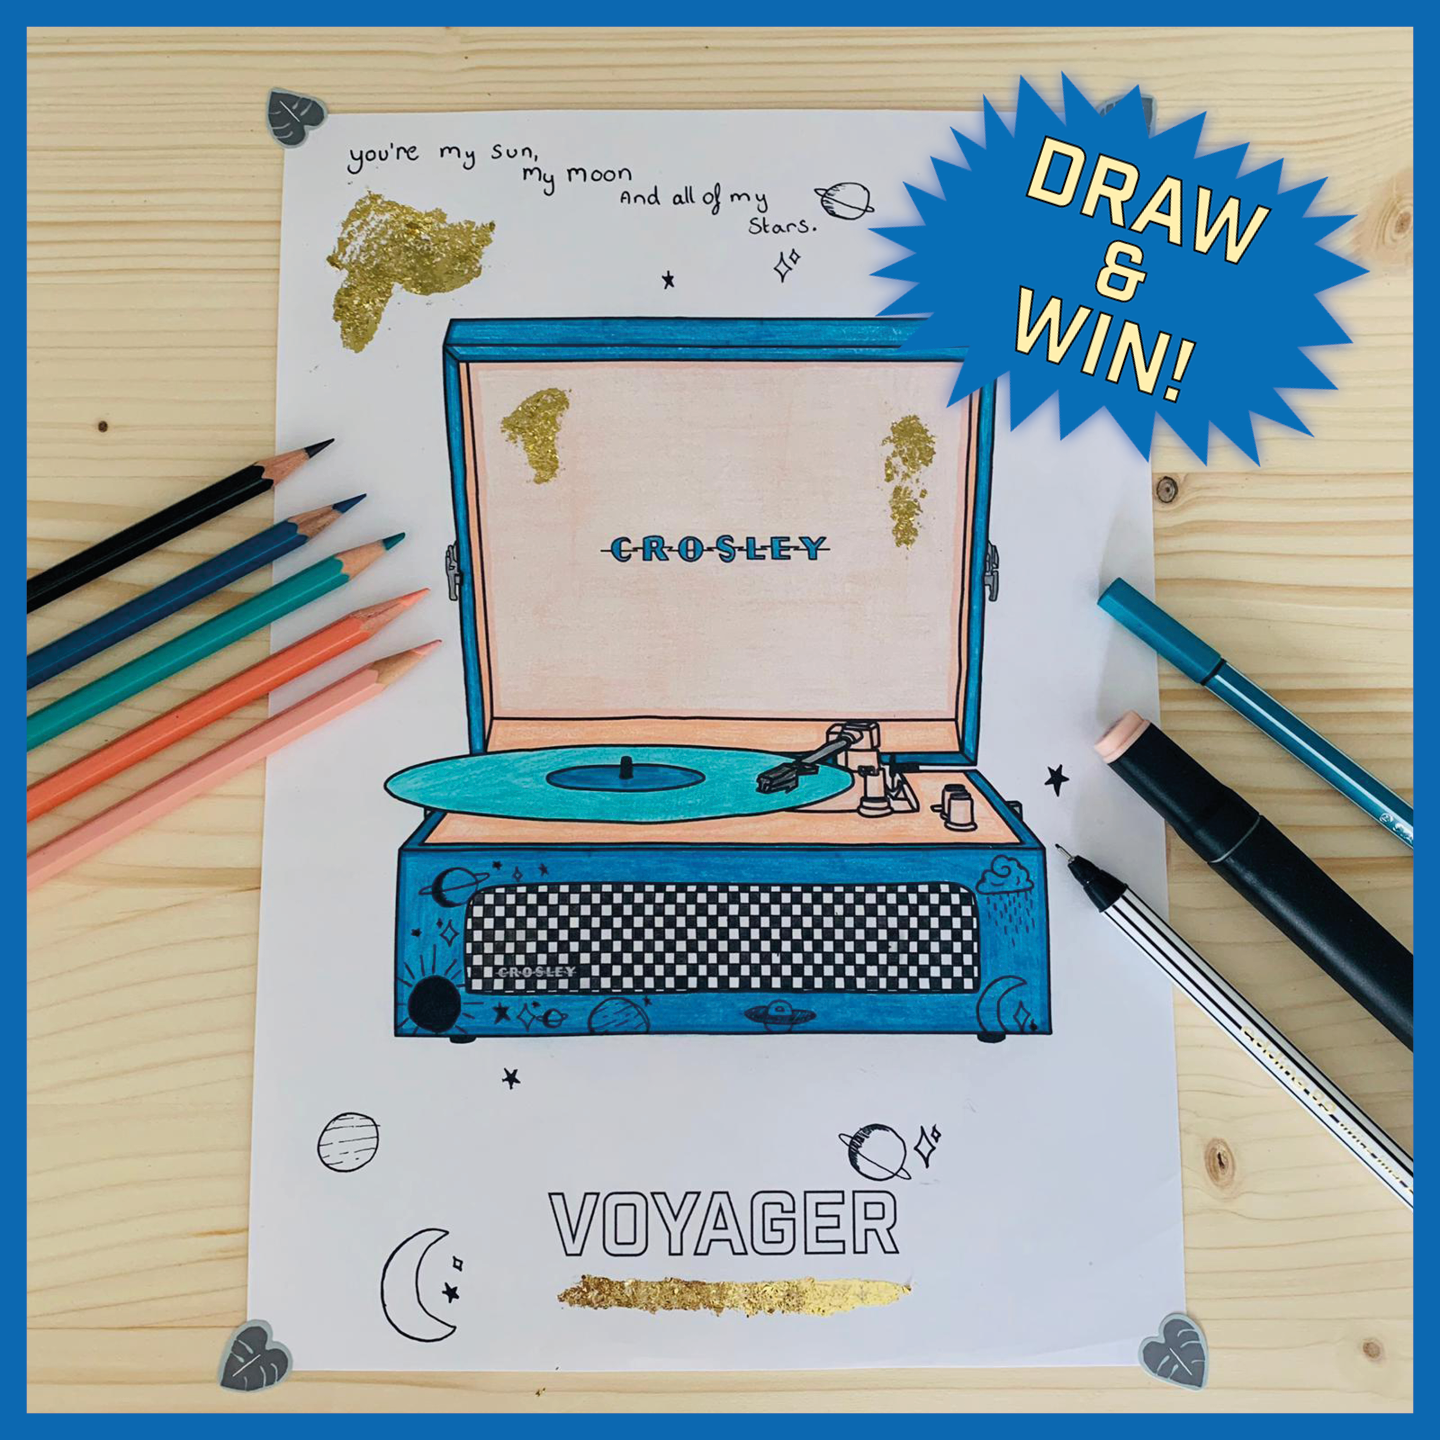 Crosley competition | Draw & Win! Crosley Radio Europe